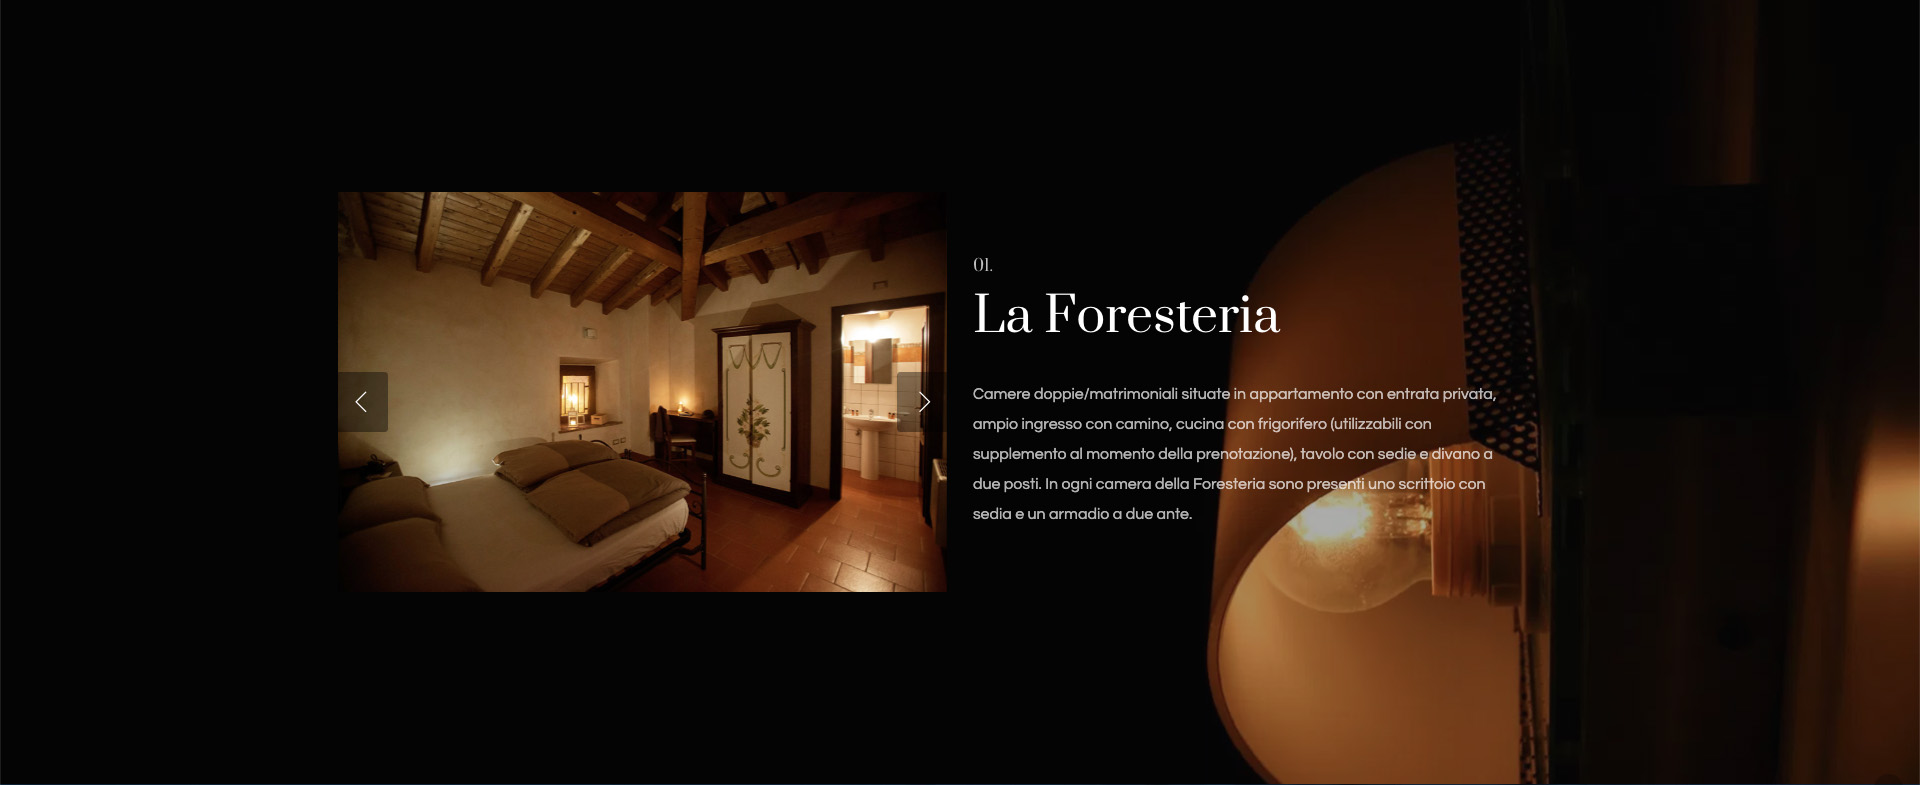 Giorgi Design Studio - Monastero San Erasmo - Web Design - La Foresteria